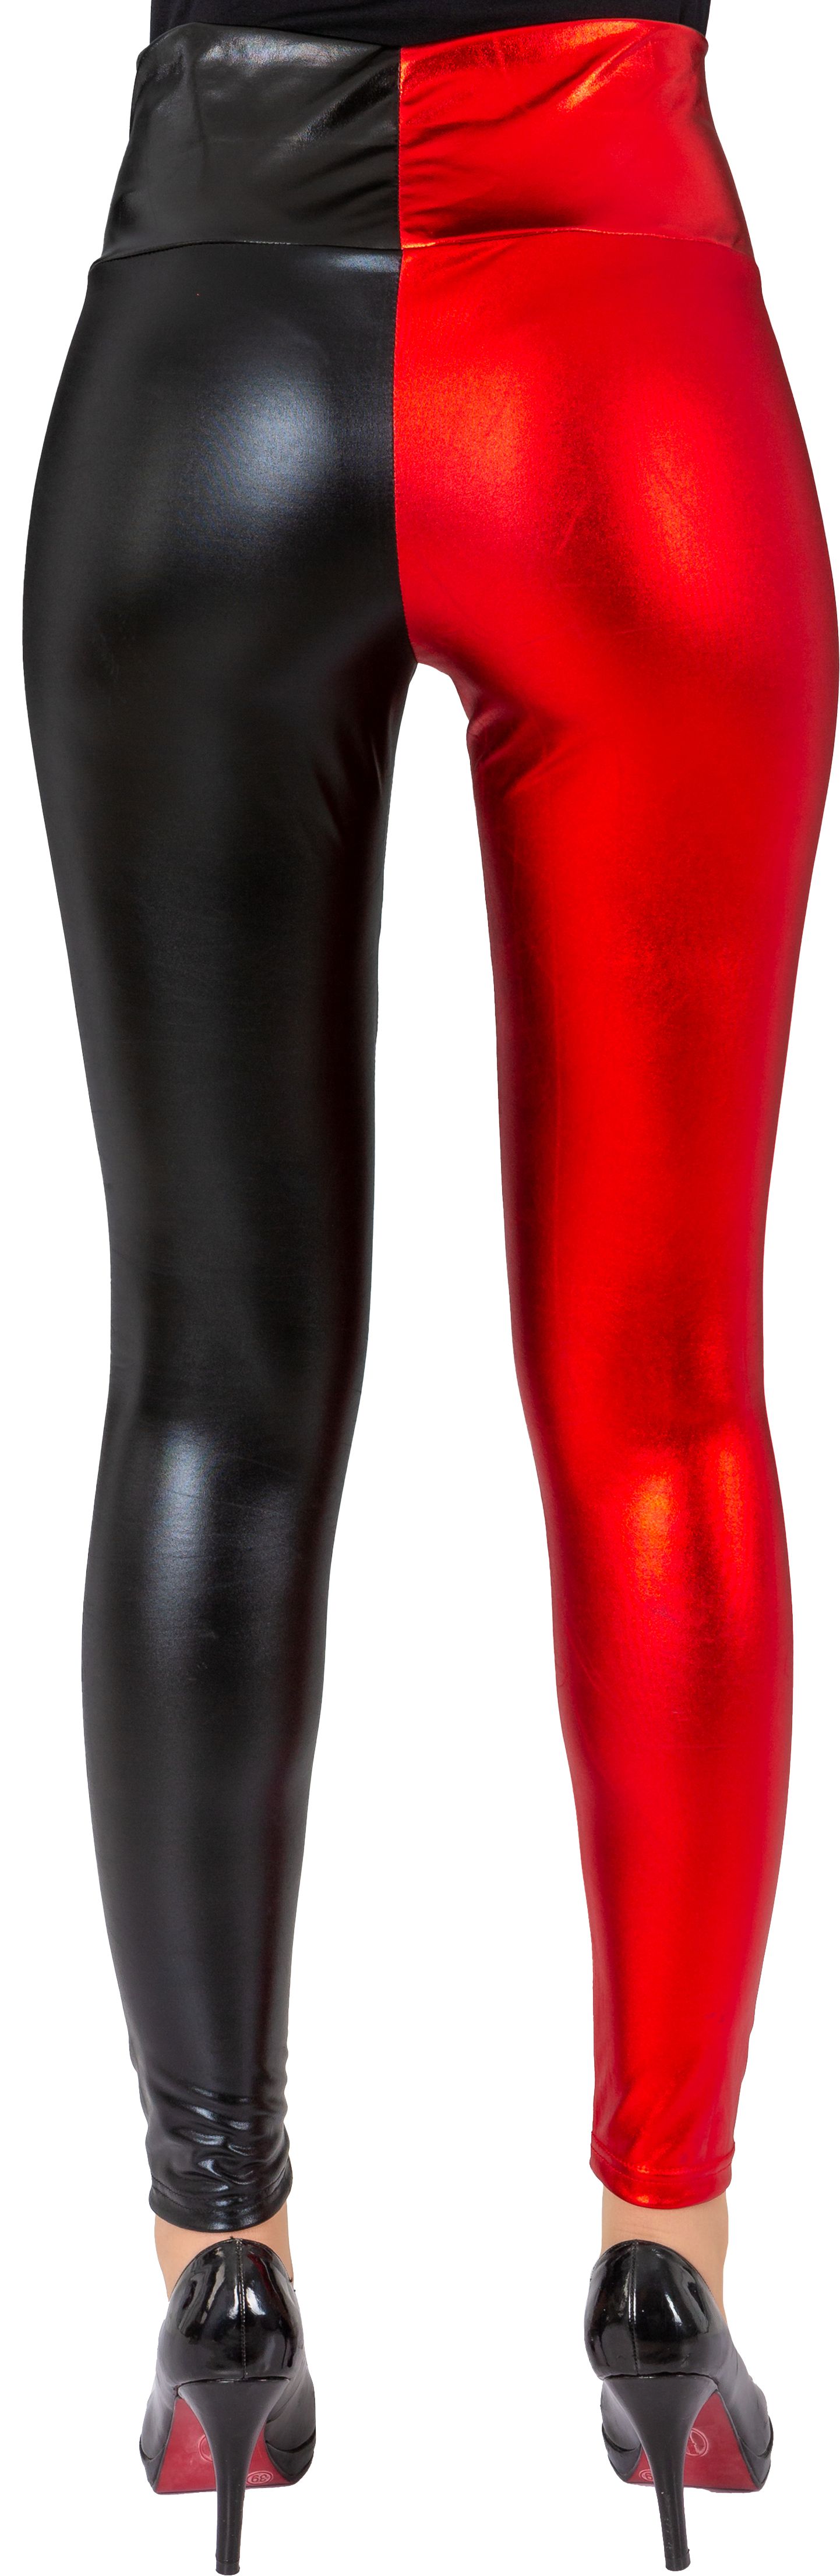 Leggings zweifarbig, rot-schwarz